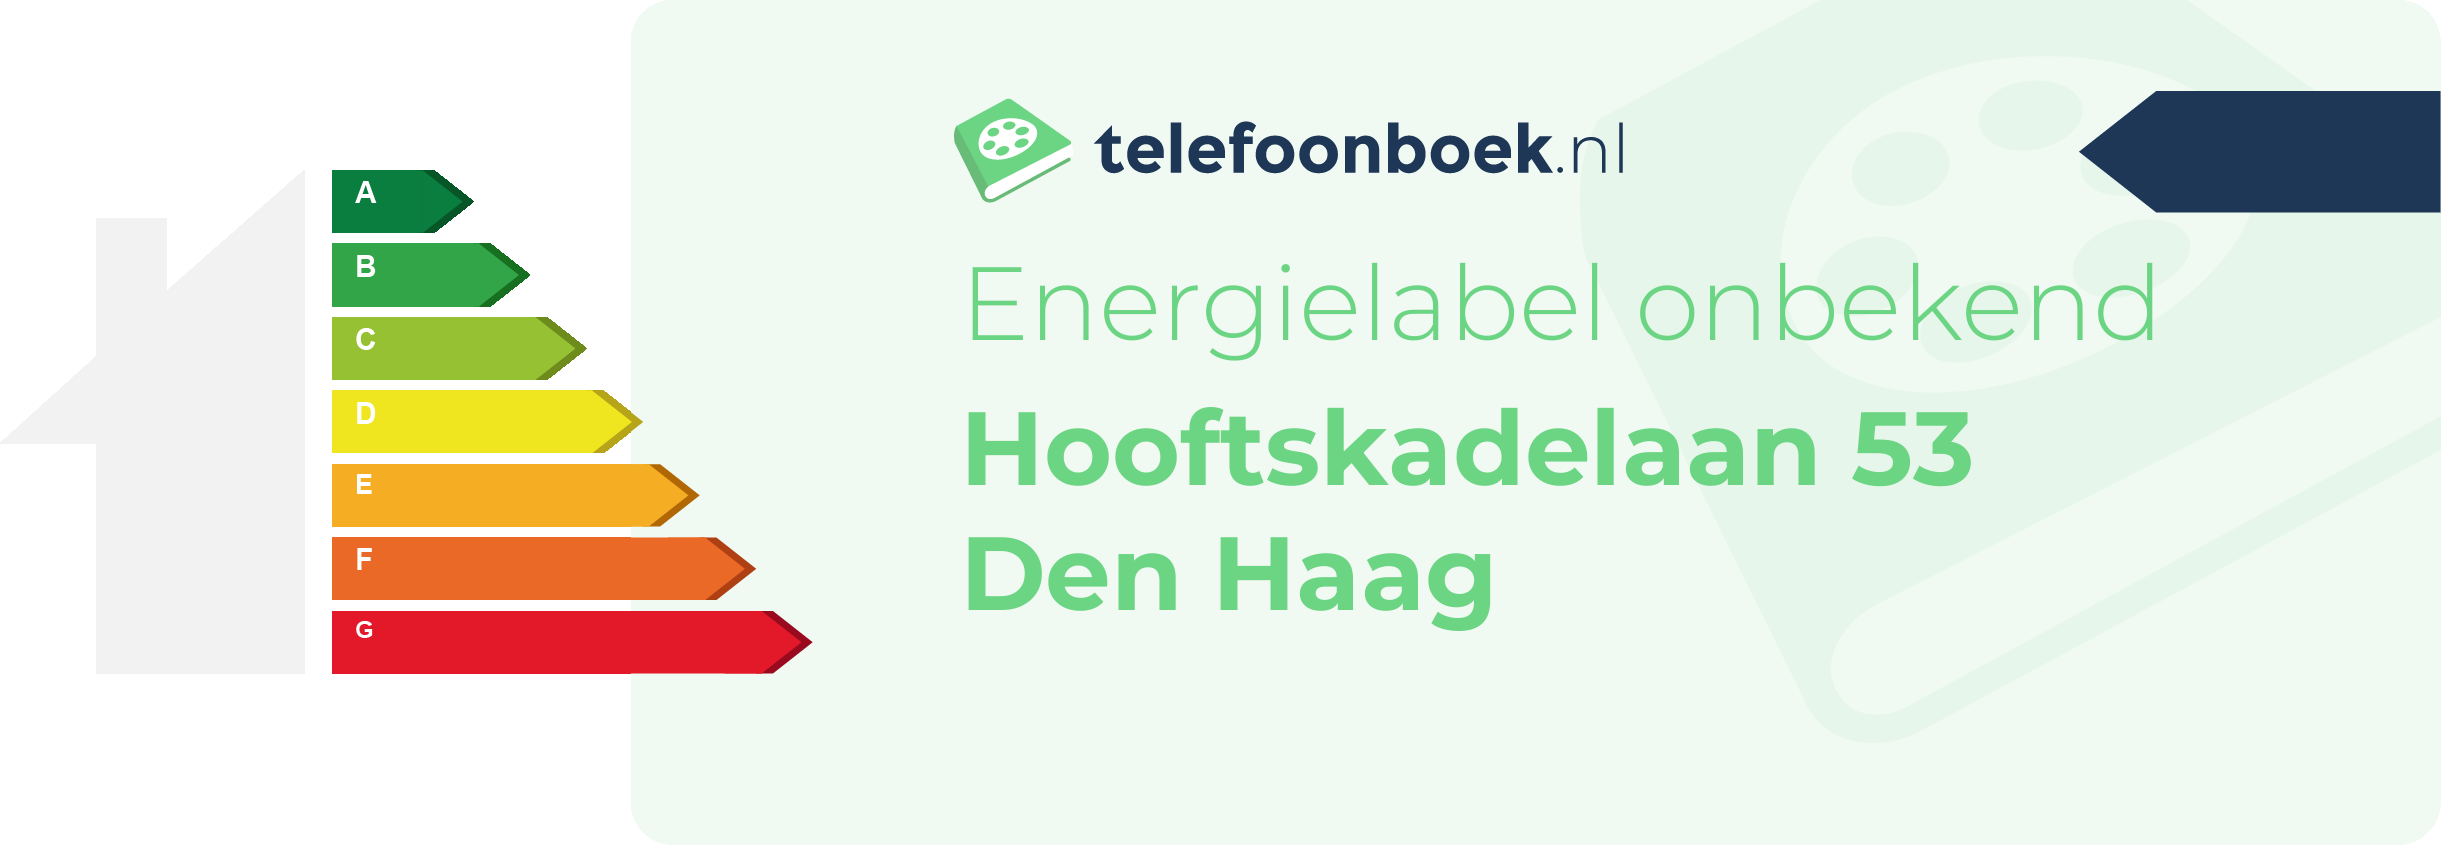 Energielabel Hooftskadelaan 53 Den Haag